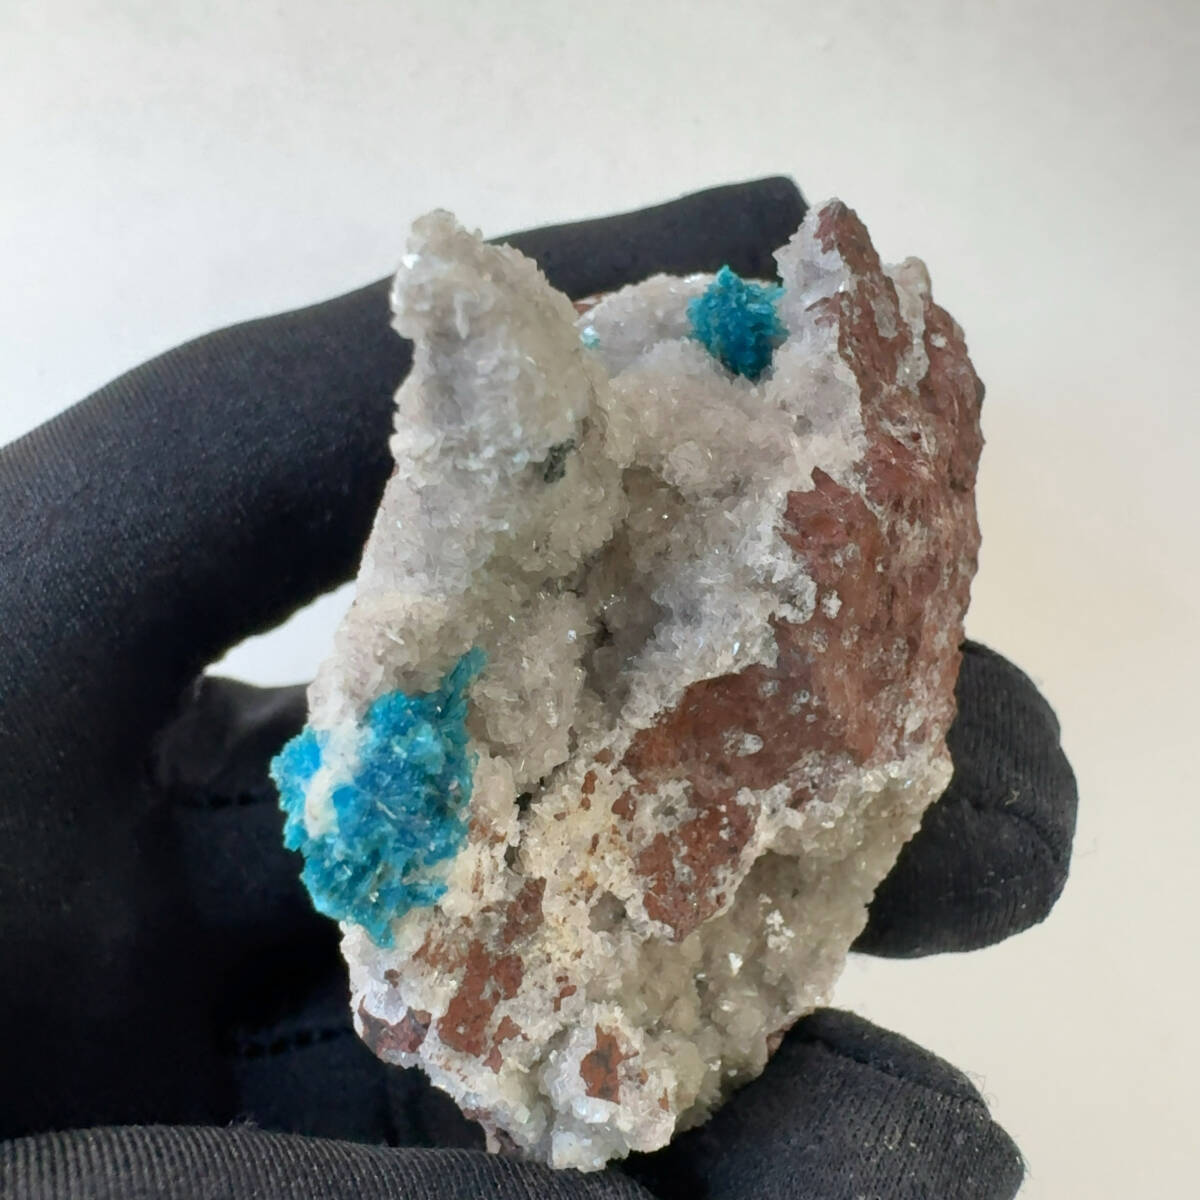 【E24109】 カバンシ石 カバンサイト 天然石 鉱物 原石 パワーストーン